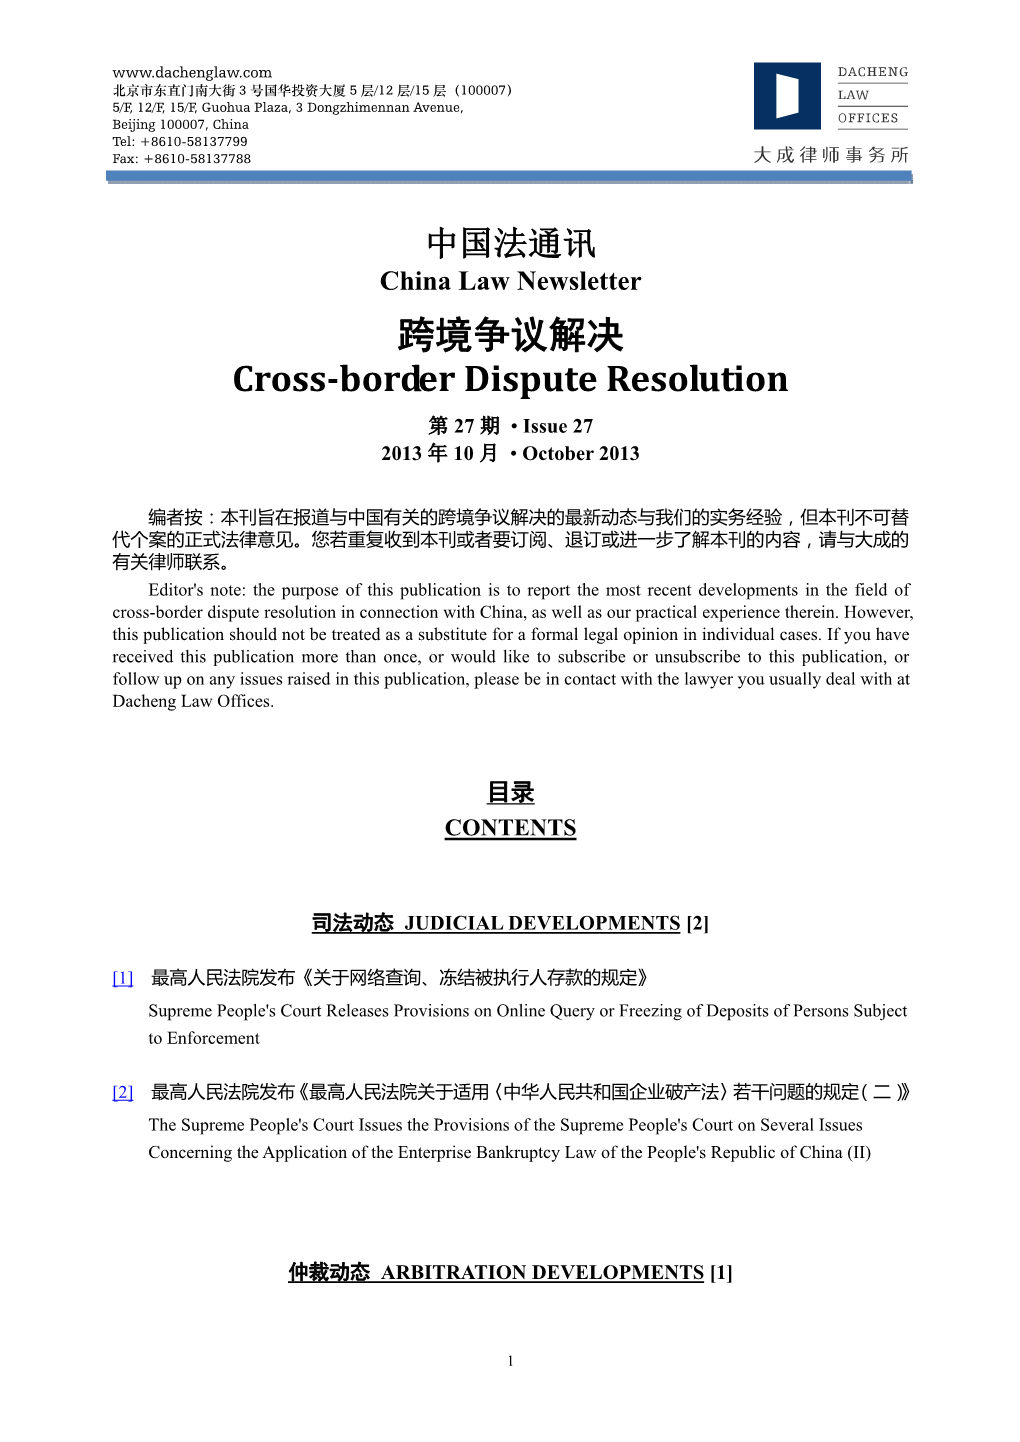 大成中国法通讯-跨境争议解决-第 27 期 Dacheng China Law Newsletter-Cross-Border Dispute Resolution-Issue 27